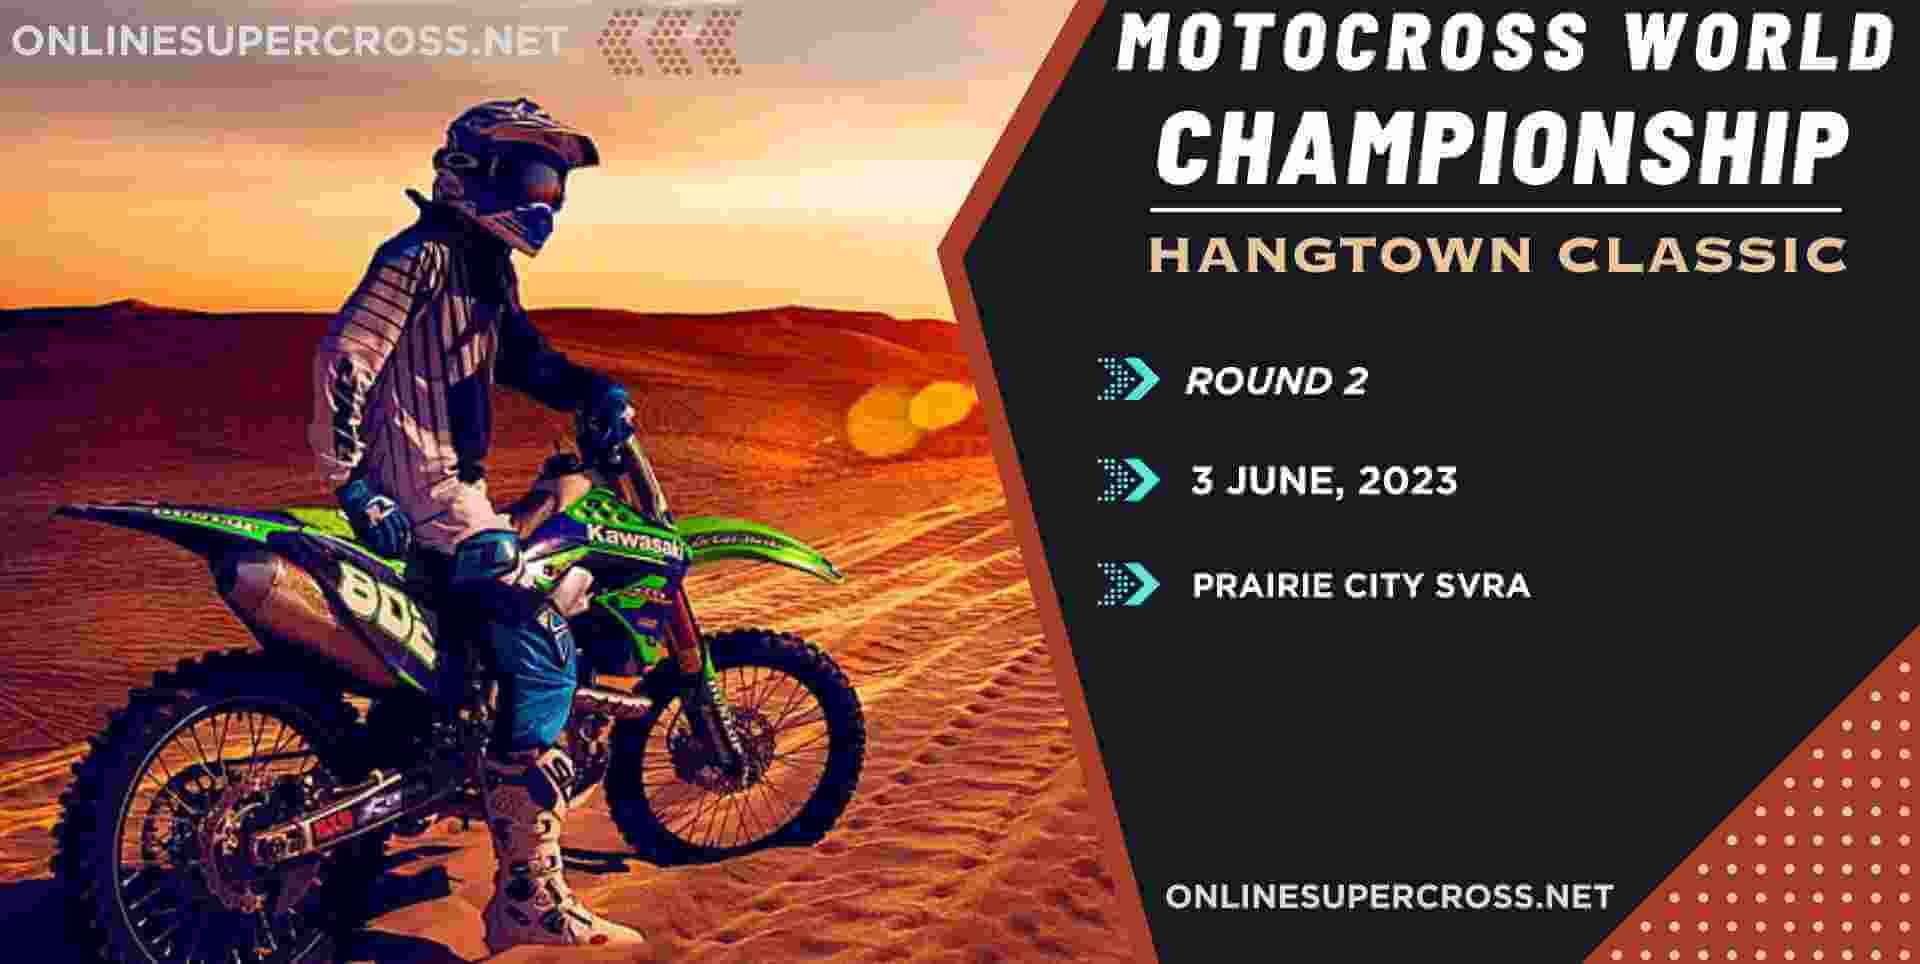 Hangtown Classic Live Stream Pro Motocross 2023